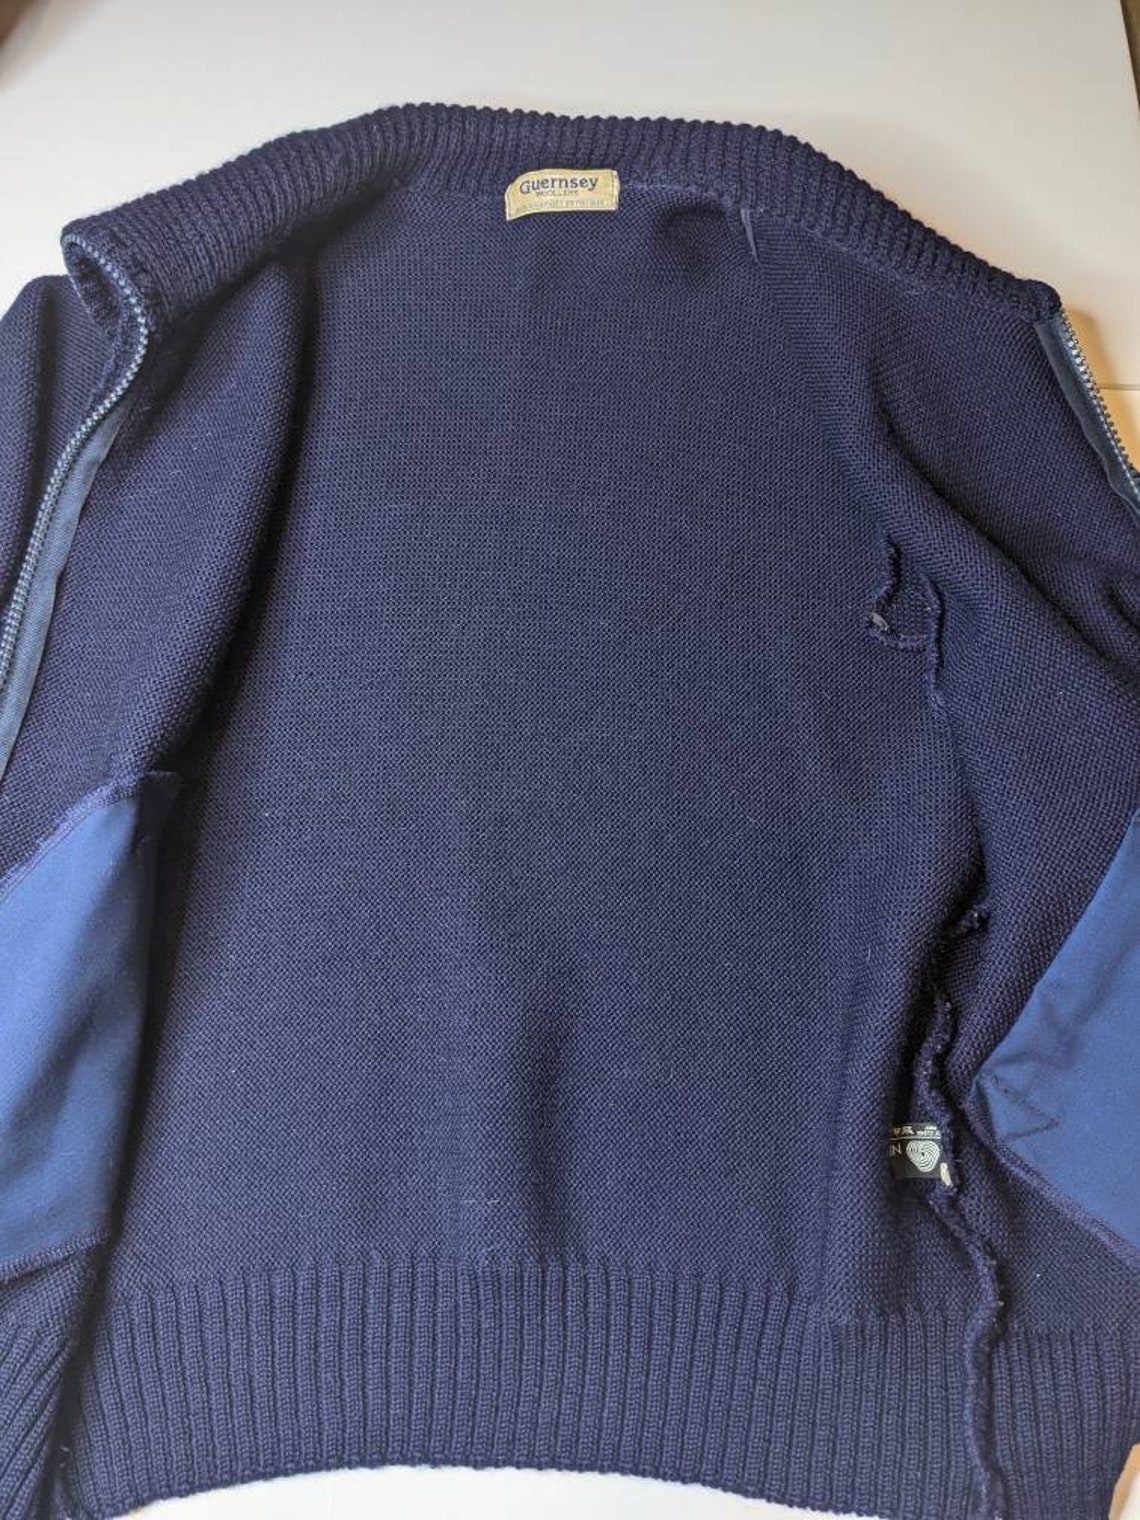 Guernsey Woollens genuine Fisherman navy blue Sweater | Etsy